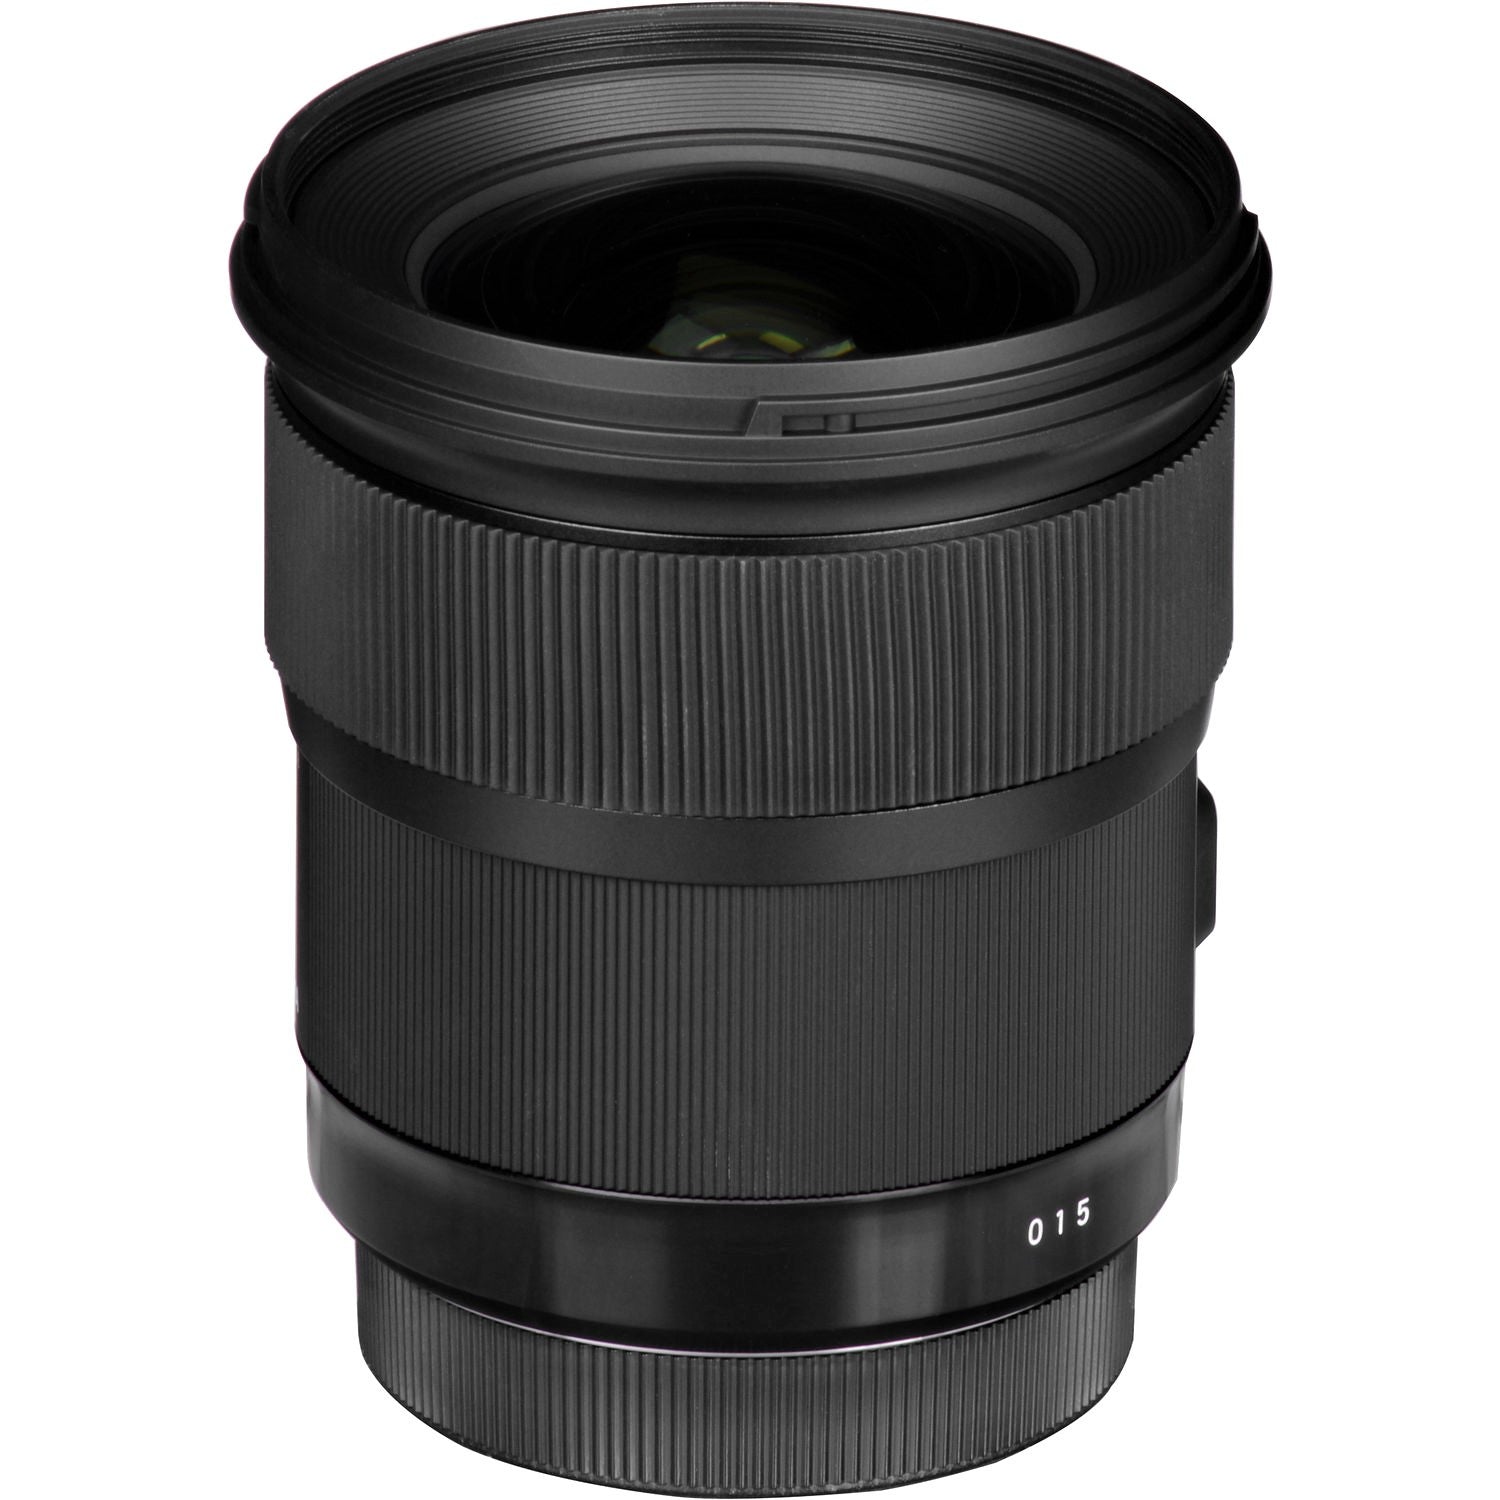 Sigma 24mm F1.4 DG HSM Art Lens for Canon EF